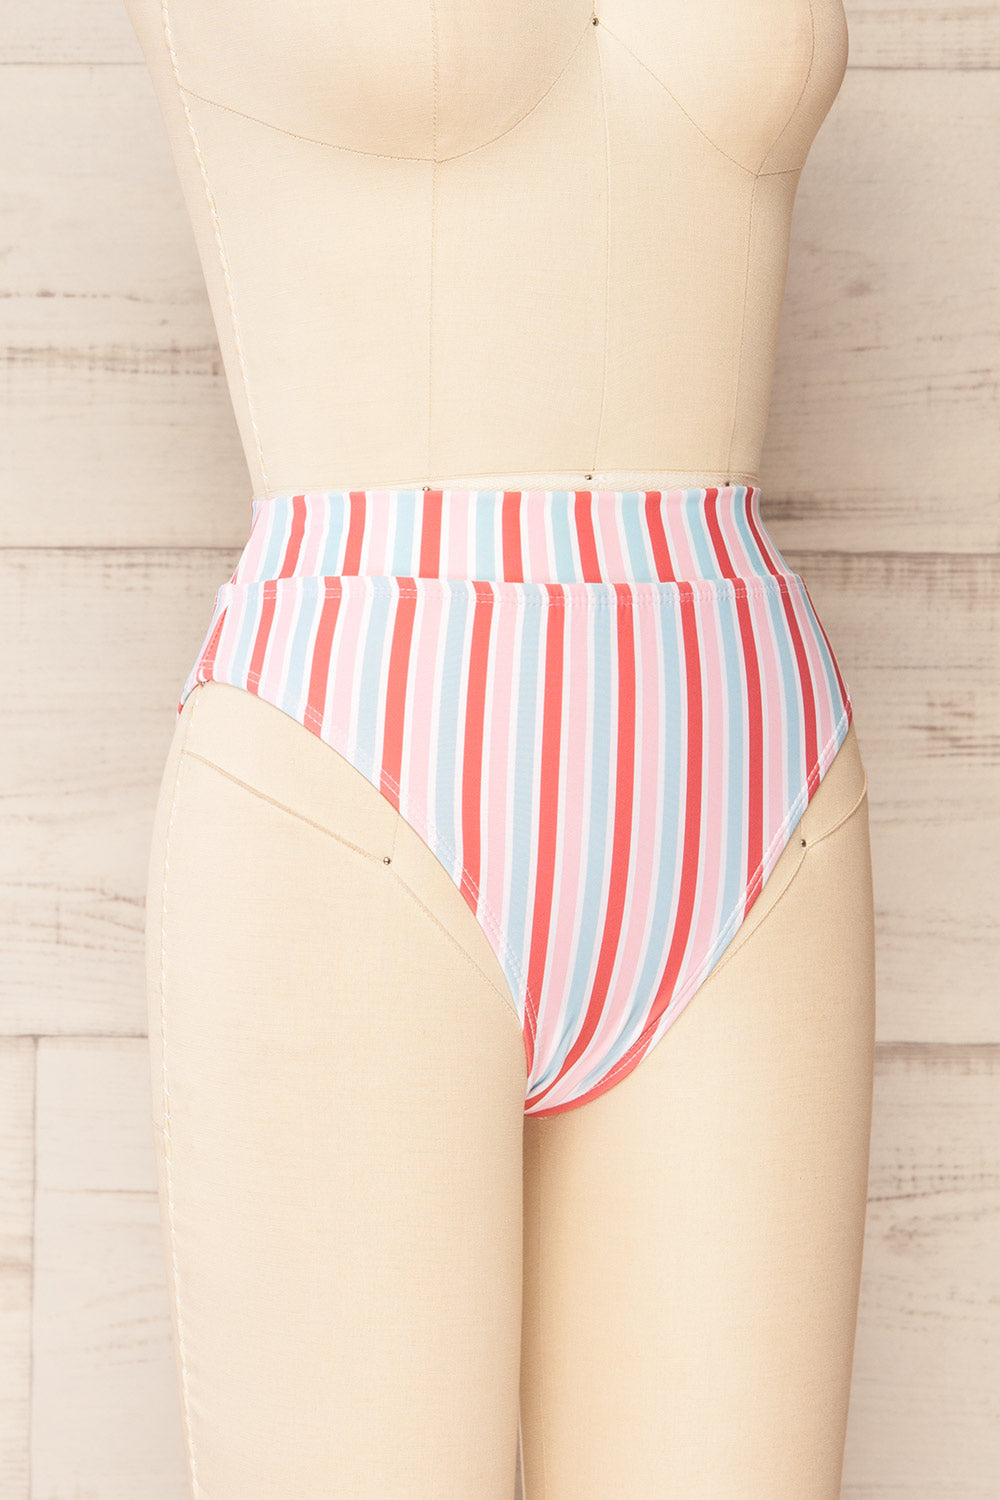 Zuwena Striped Bikini Bottom | La petite garçonne side view